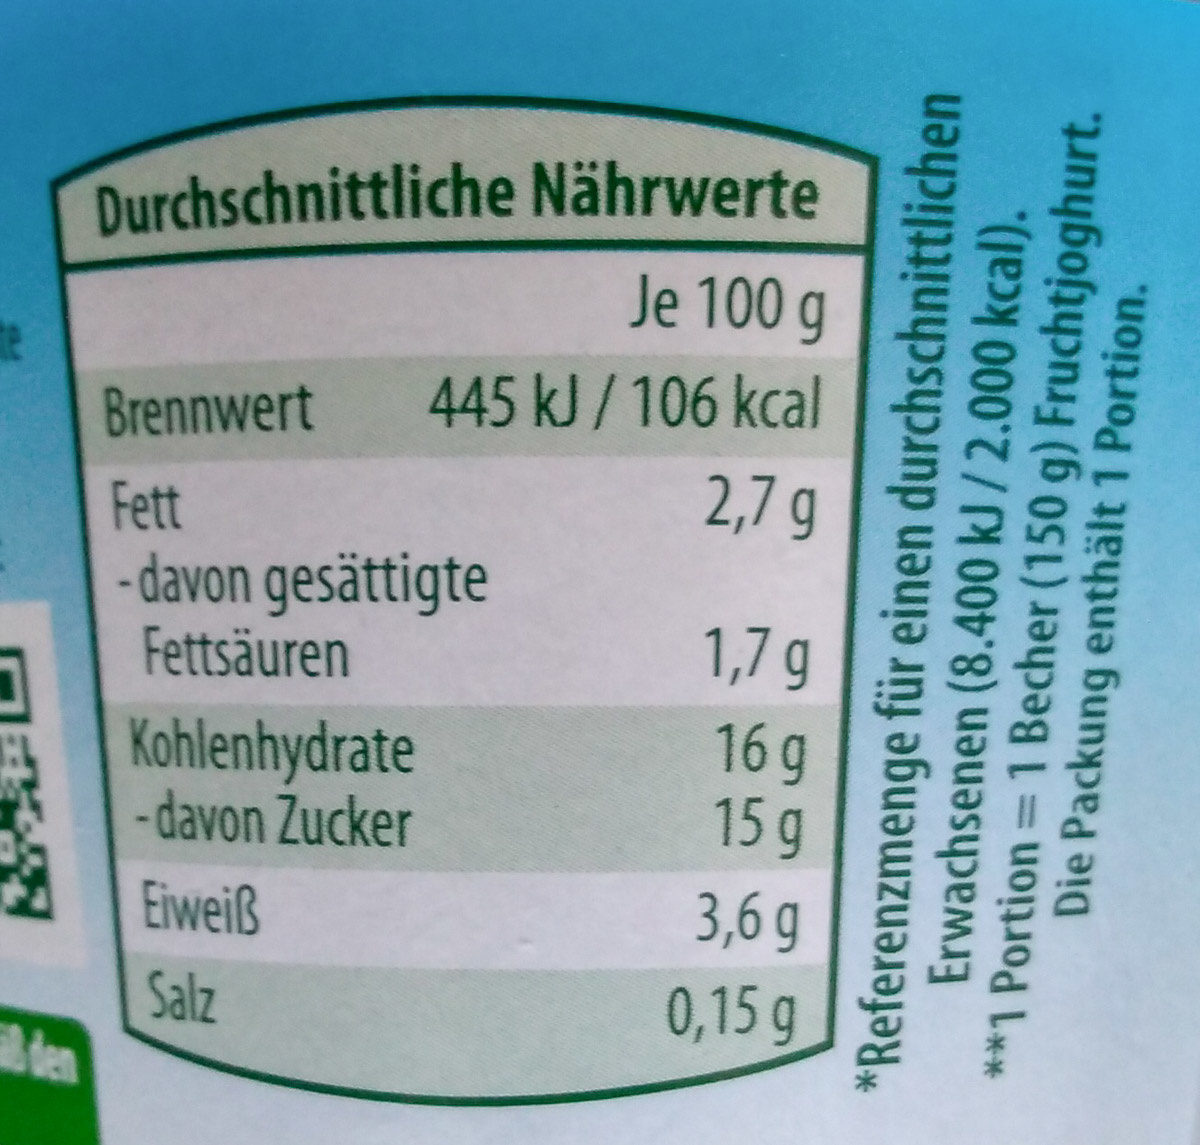 Fruchtjoghurt Himbeere mit Vanille verfeinert - Nutrition facts - de